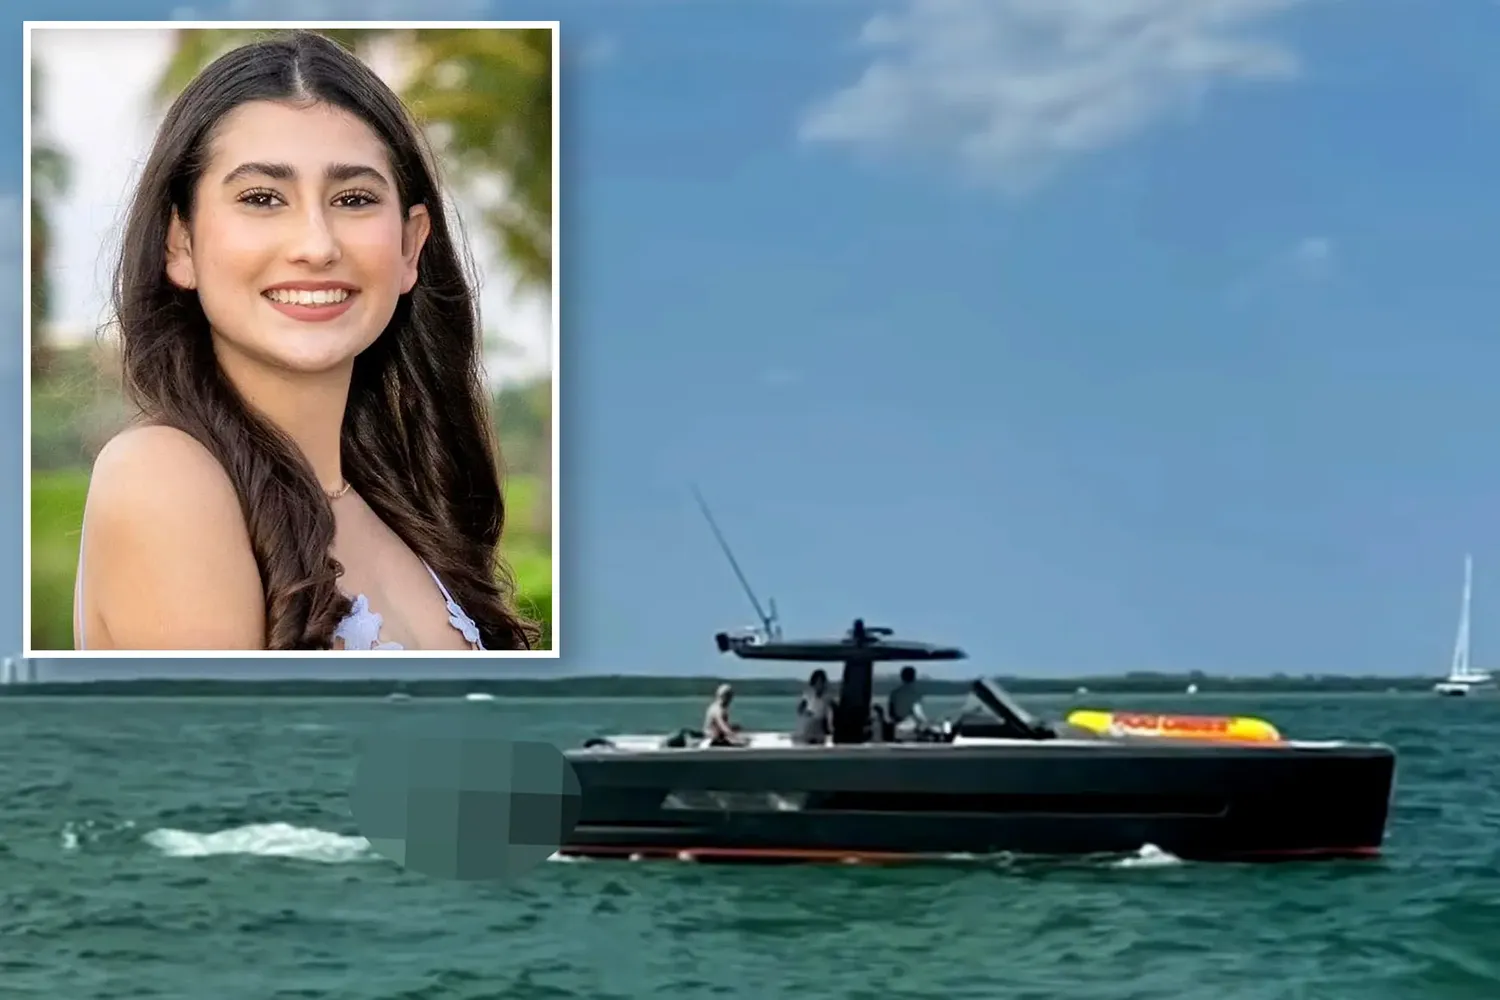 Ella Riley Adler, 15, was killed in a hit-and-run boat crash Saturday.